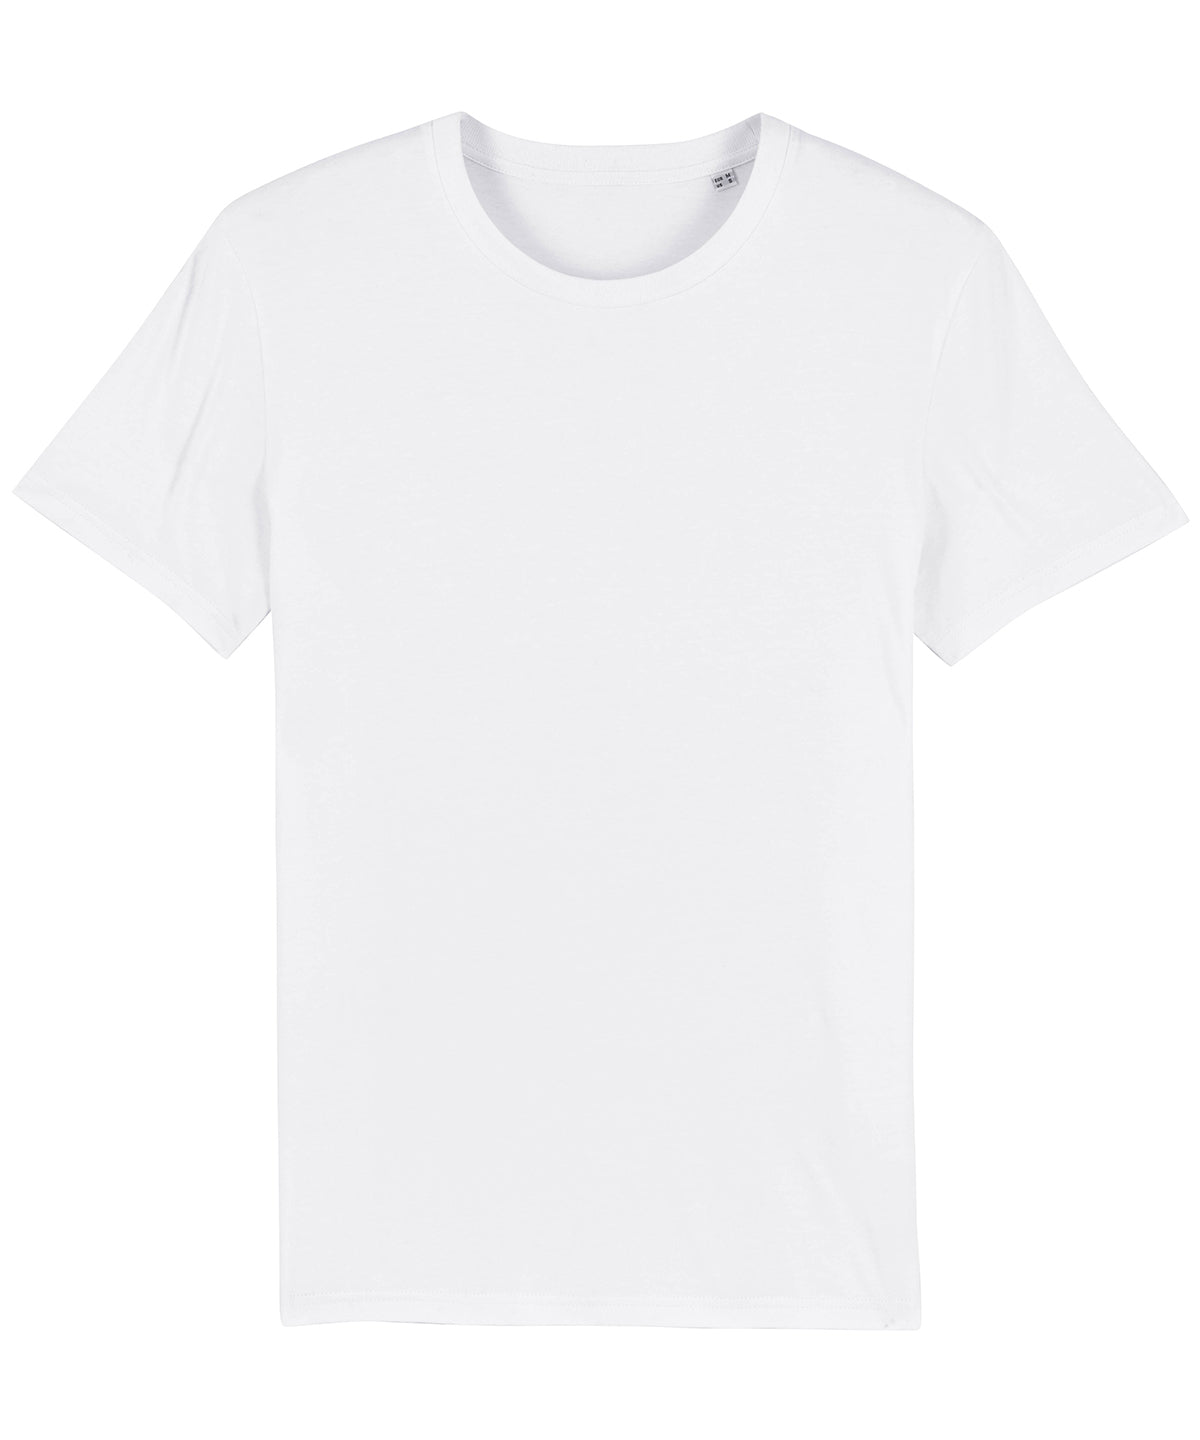 Stanley/Stella Unisex Creator Iconic T-Shirt  White